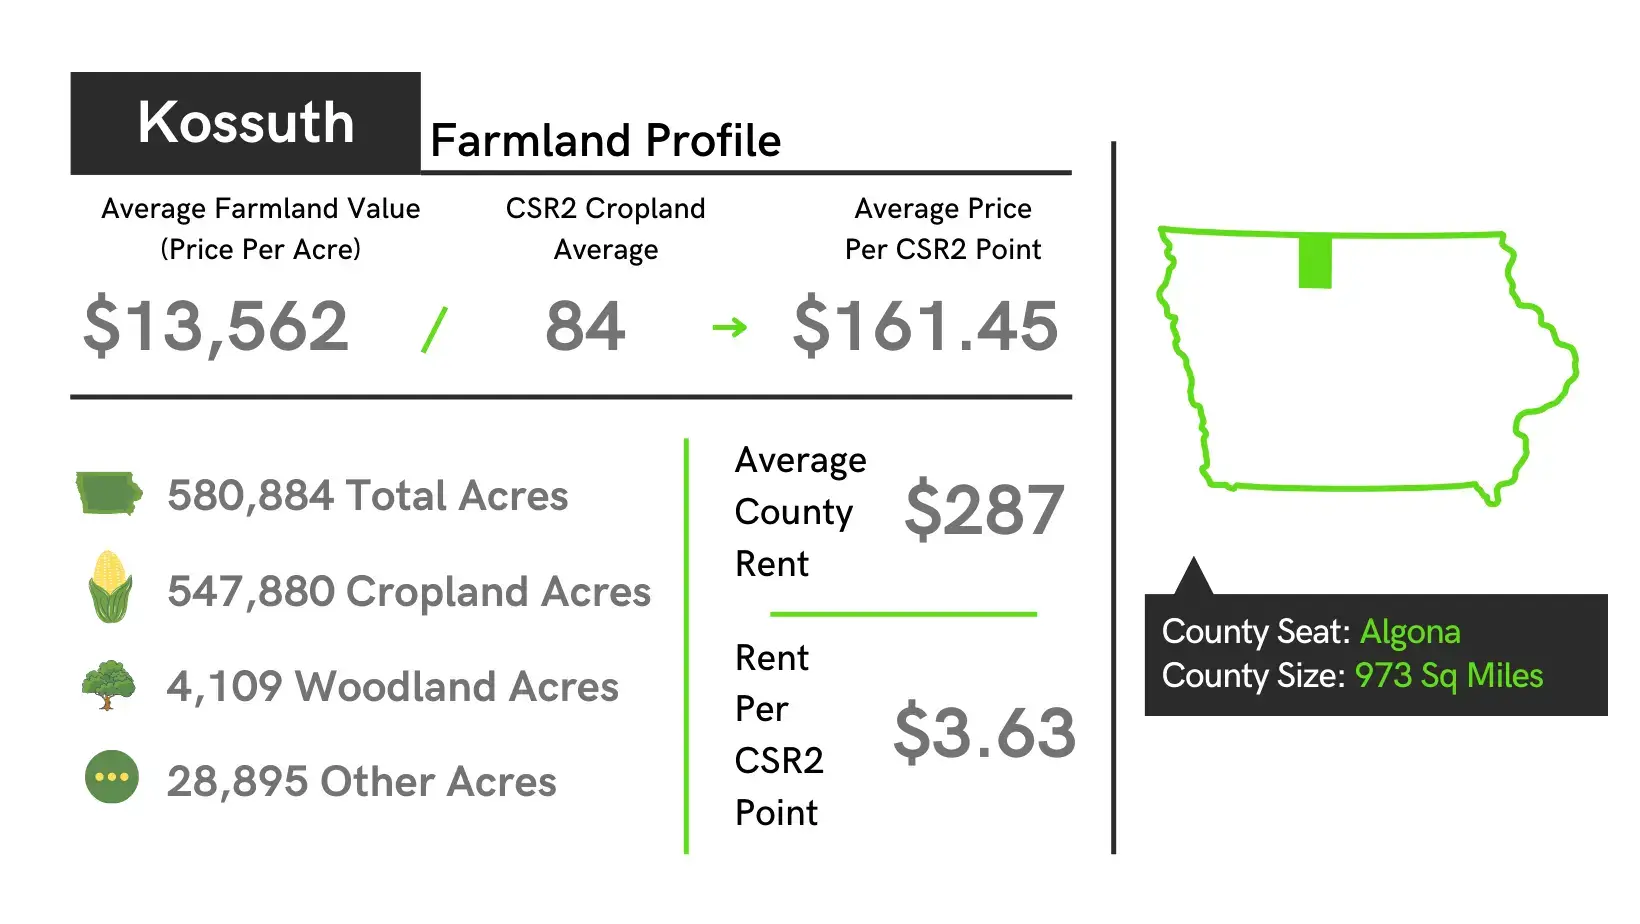 Kossuth County Farmland Profile